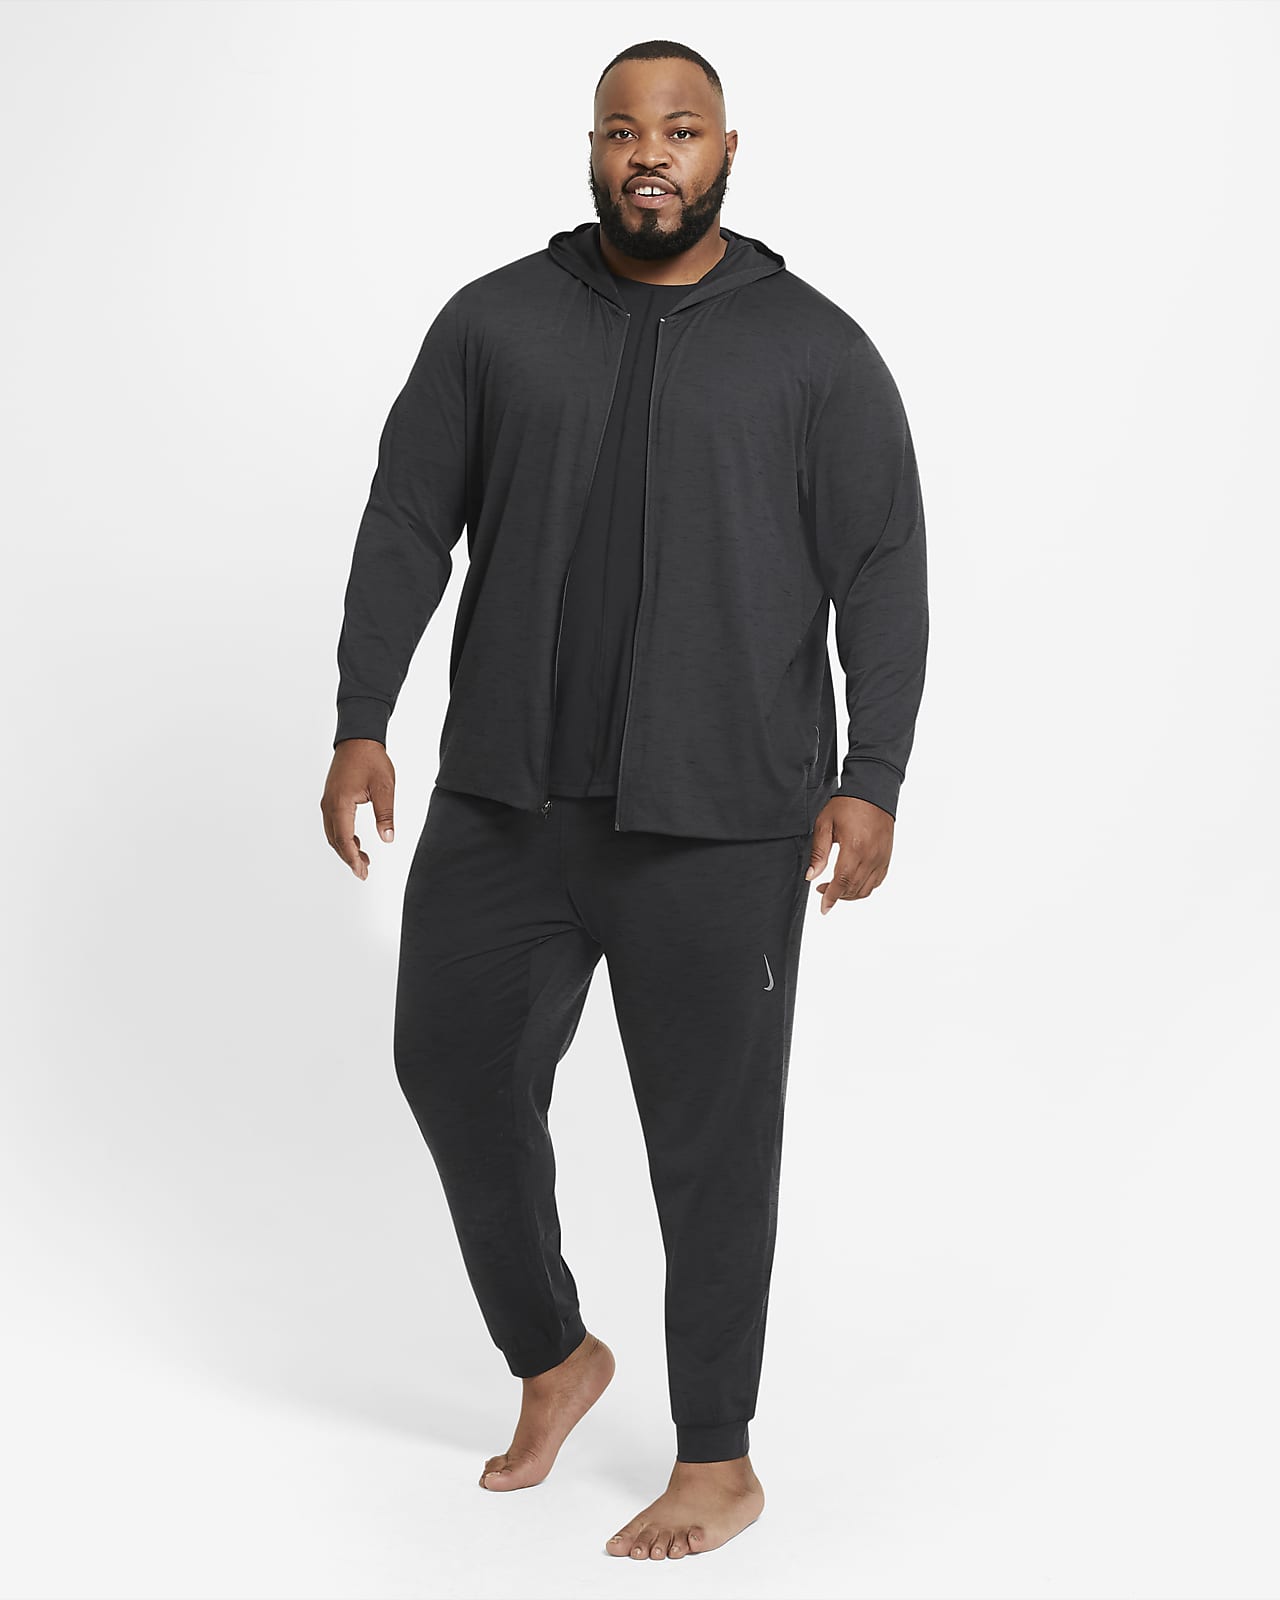 Nike Yoga Dri-FIT joggers in dark grey